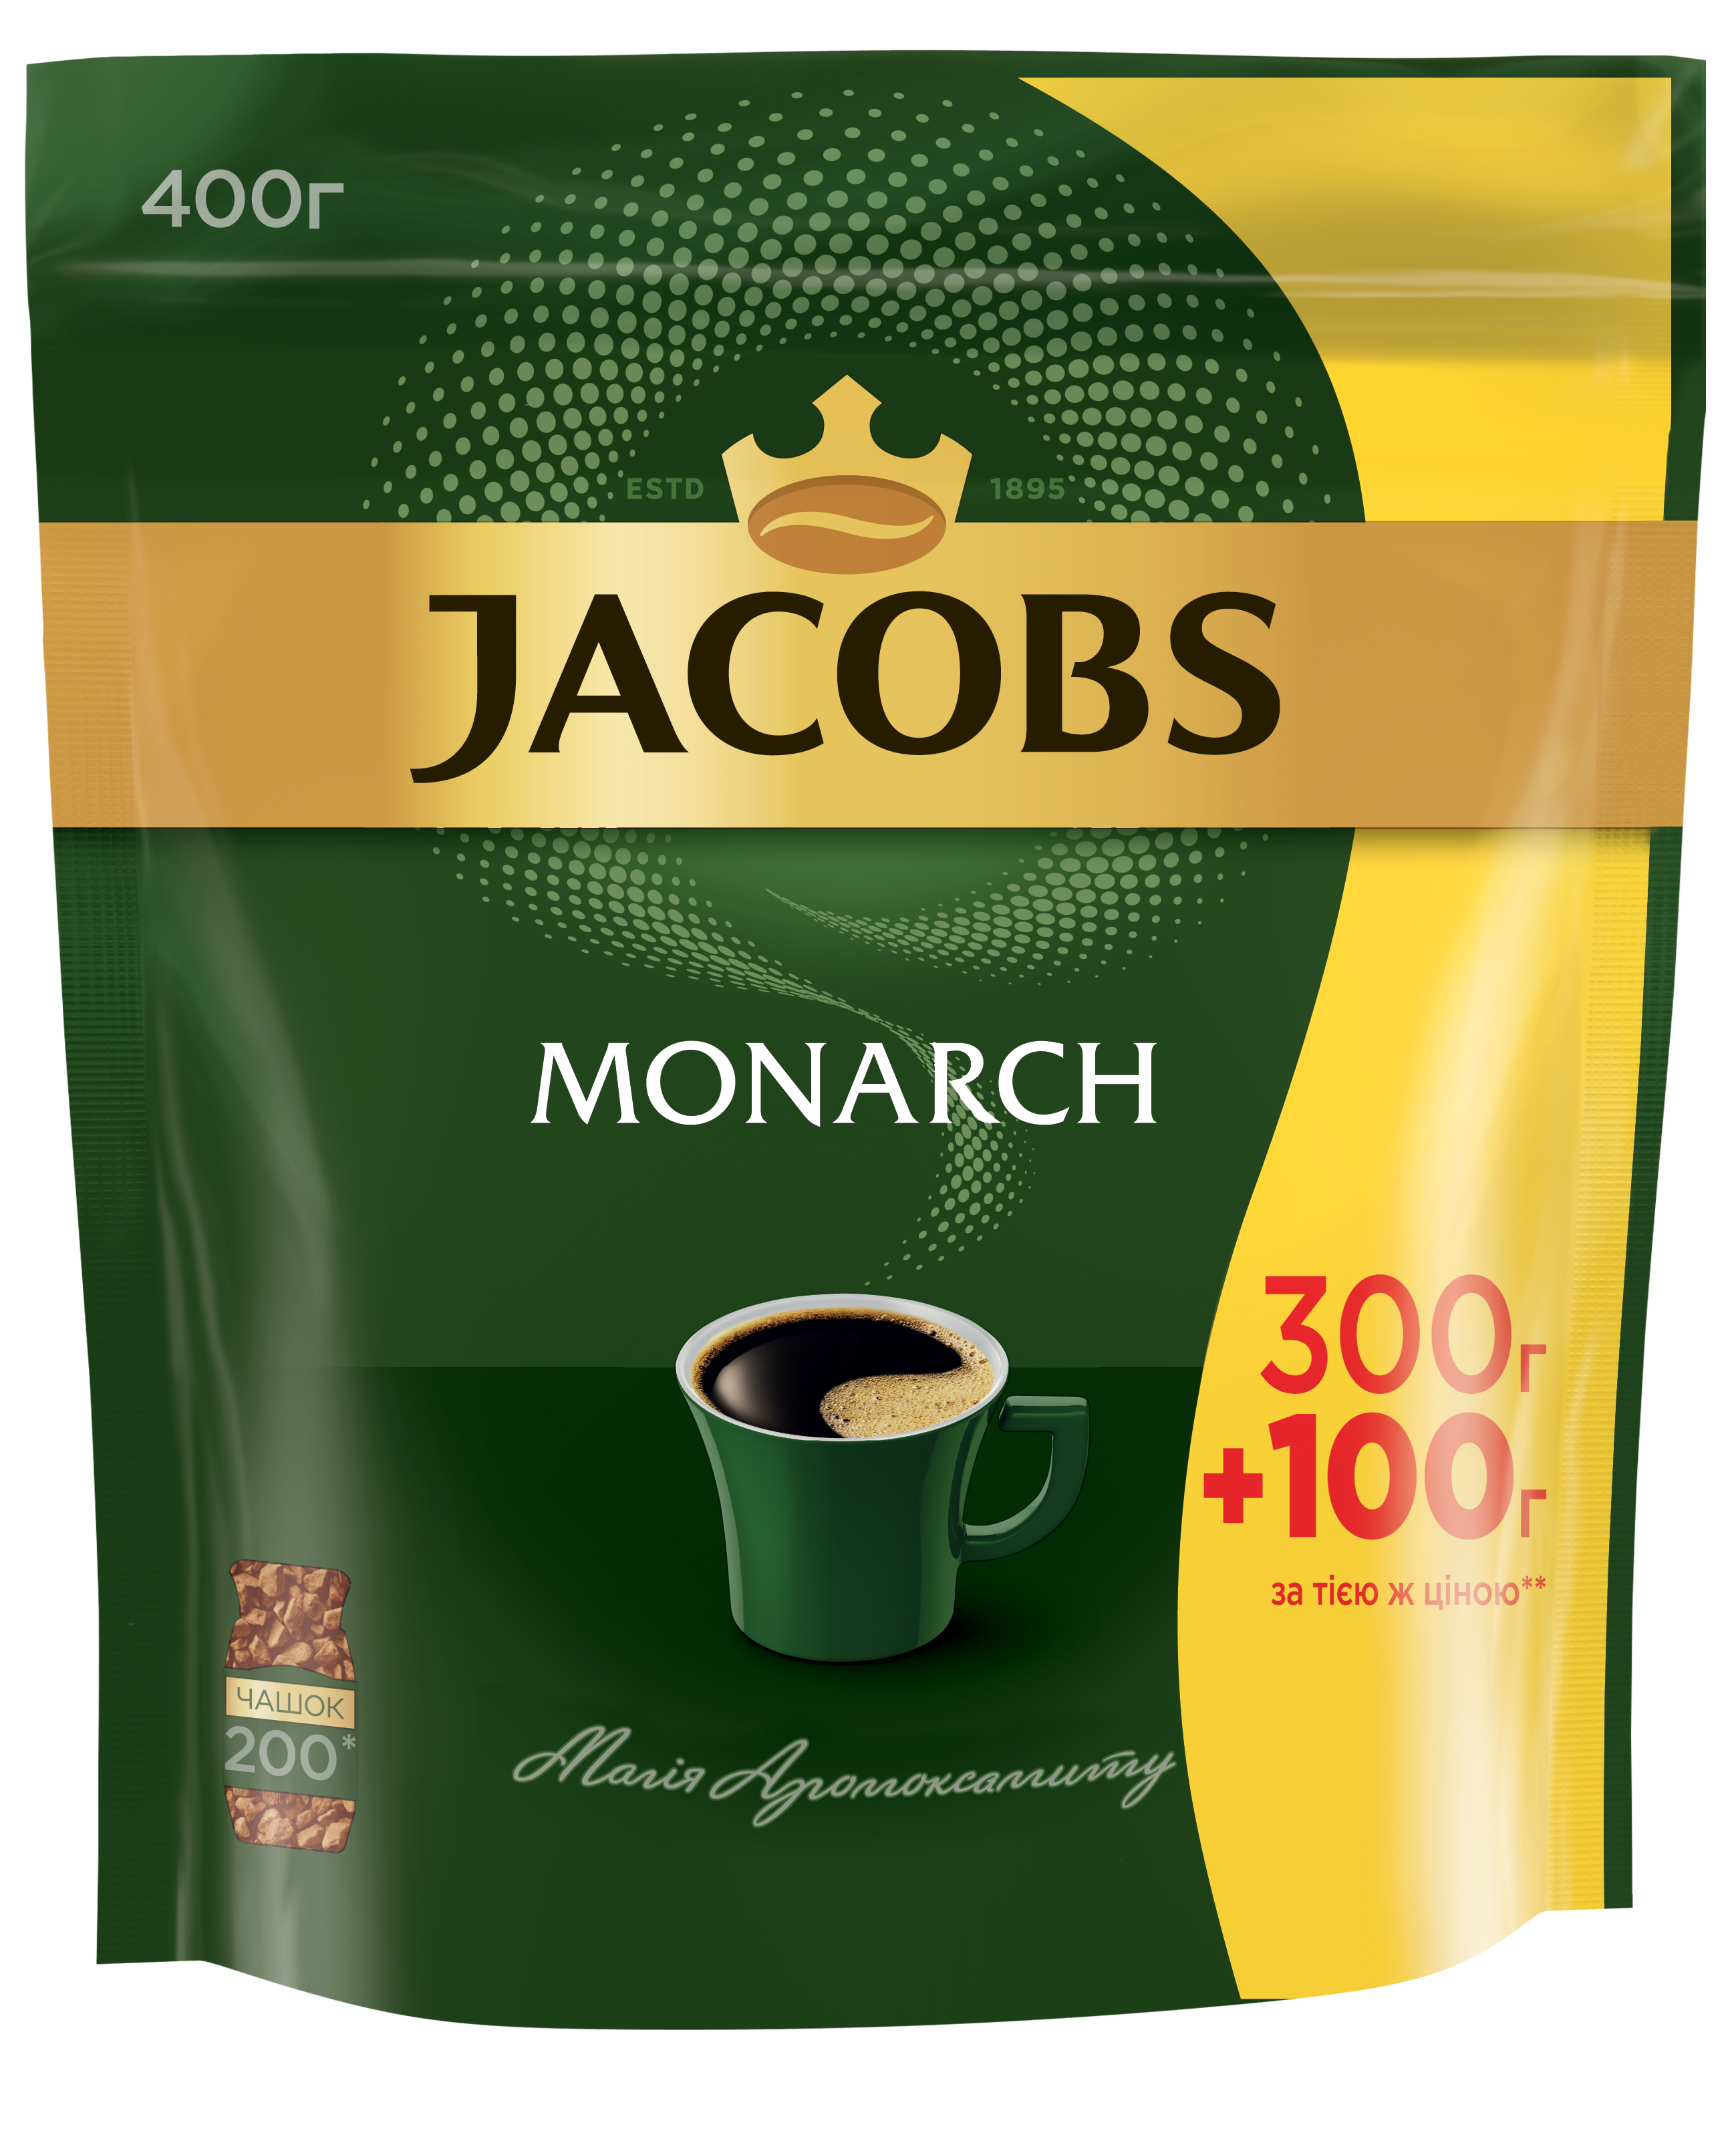 Кофе монарх раньше. Jacobs Monarch 300 гр. Якобс Монарх 400г. Кофе Jacobs Monarch 400 гр. Кофе растворимый Якобс Монарх.